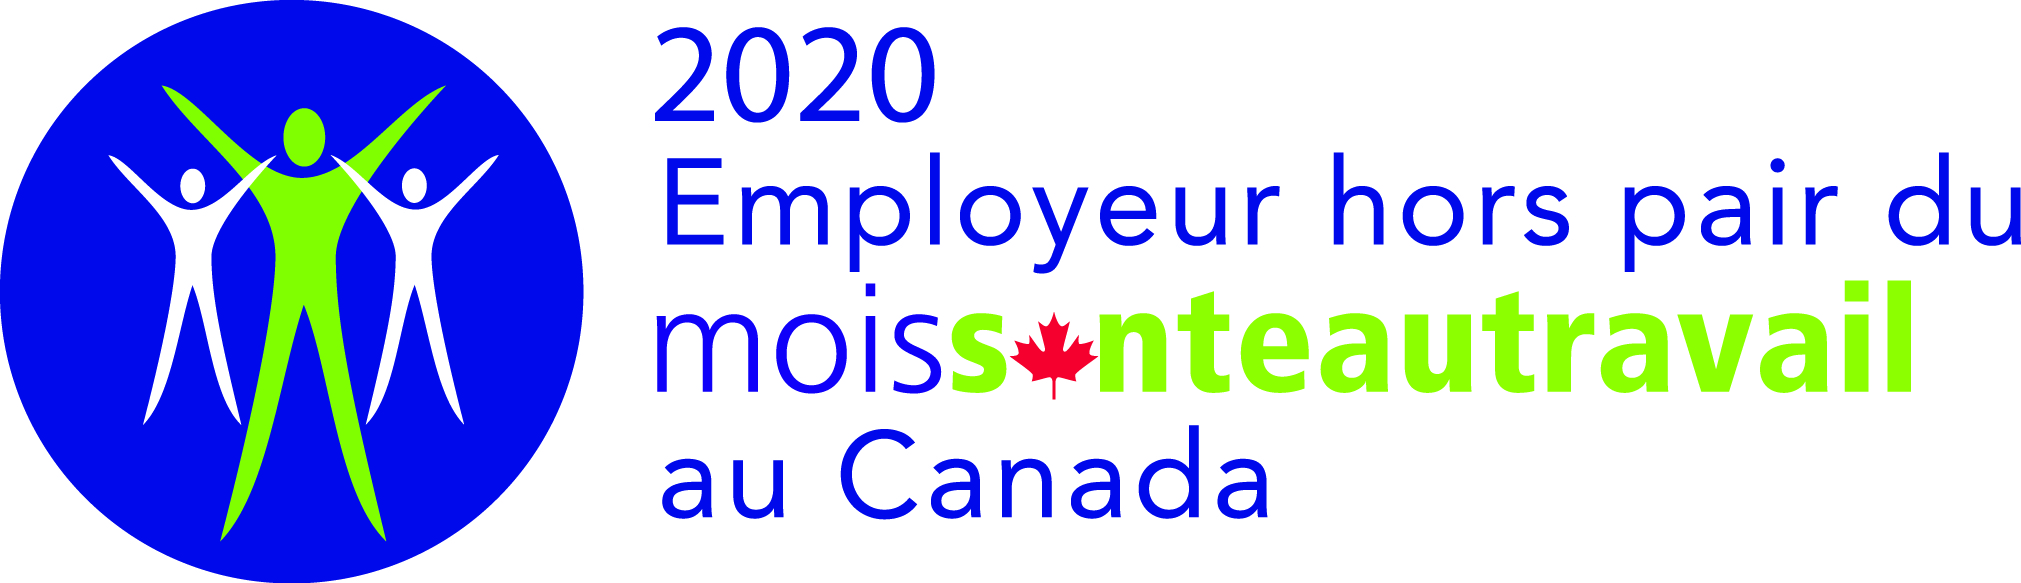 Great Employer logo_2020_FR.jpg